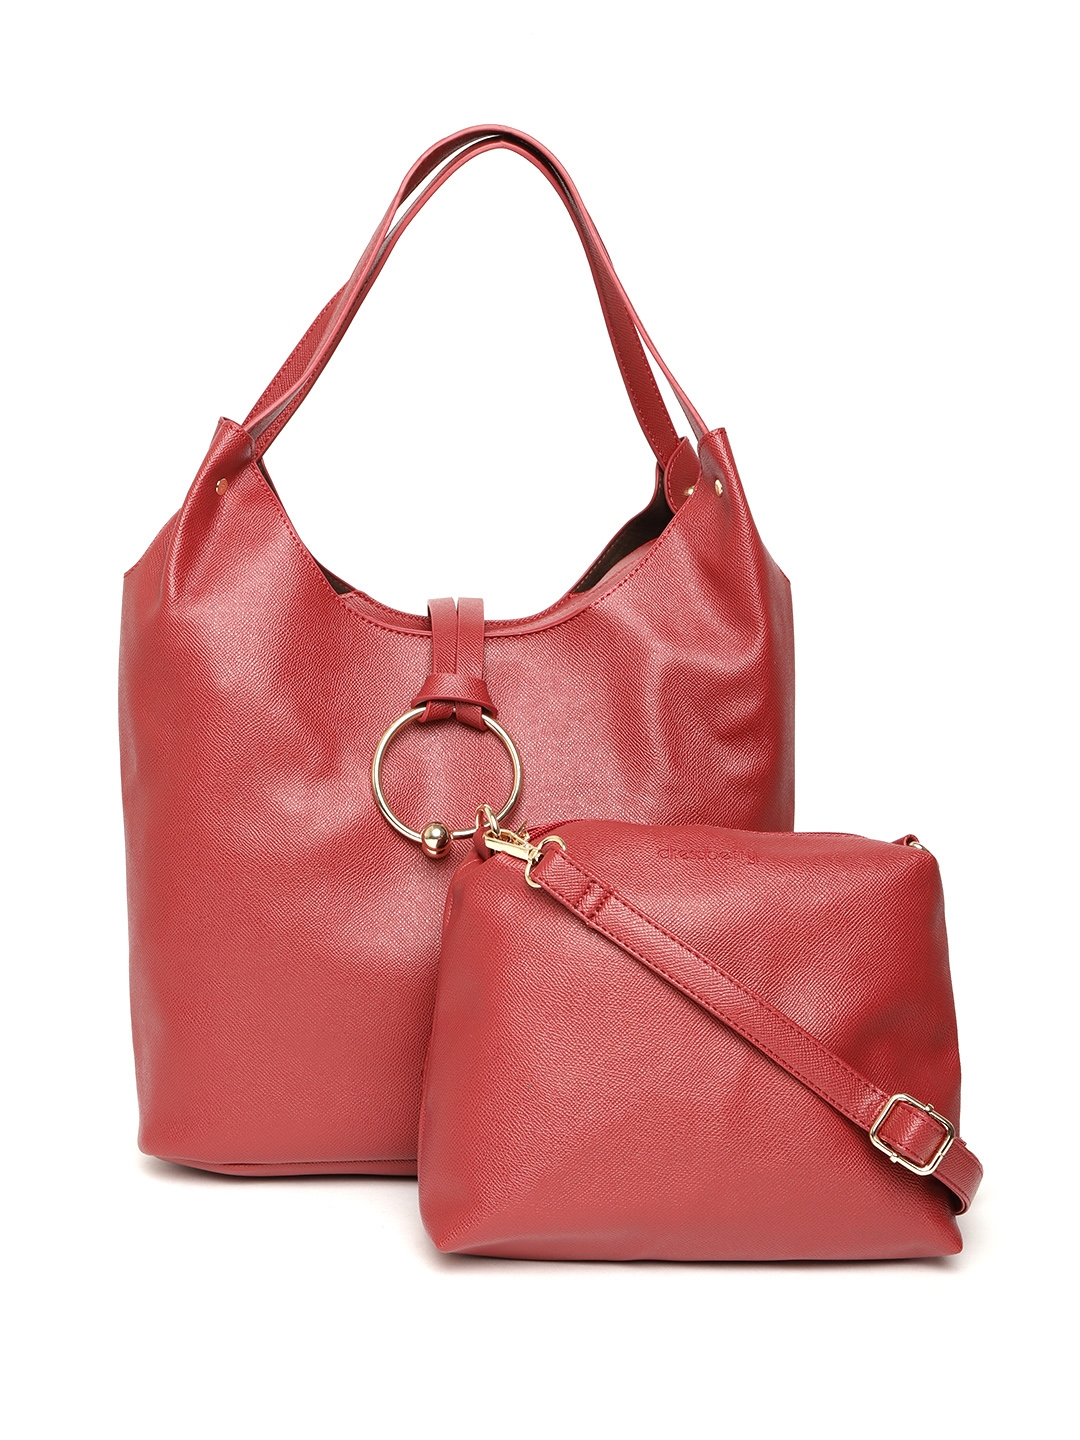 dressberry handbags